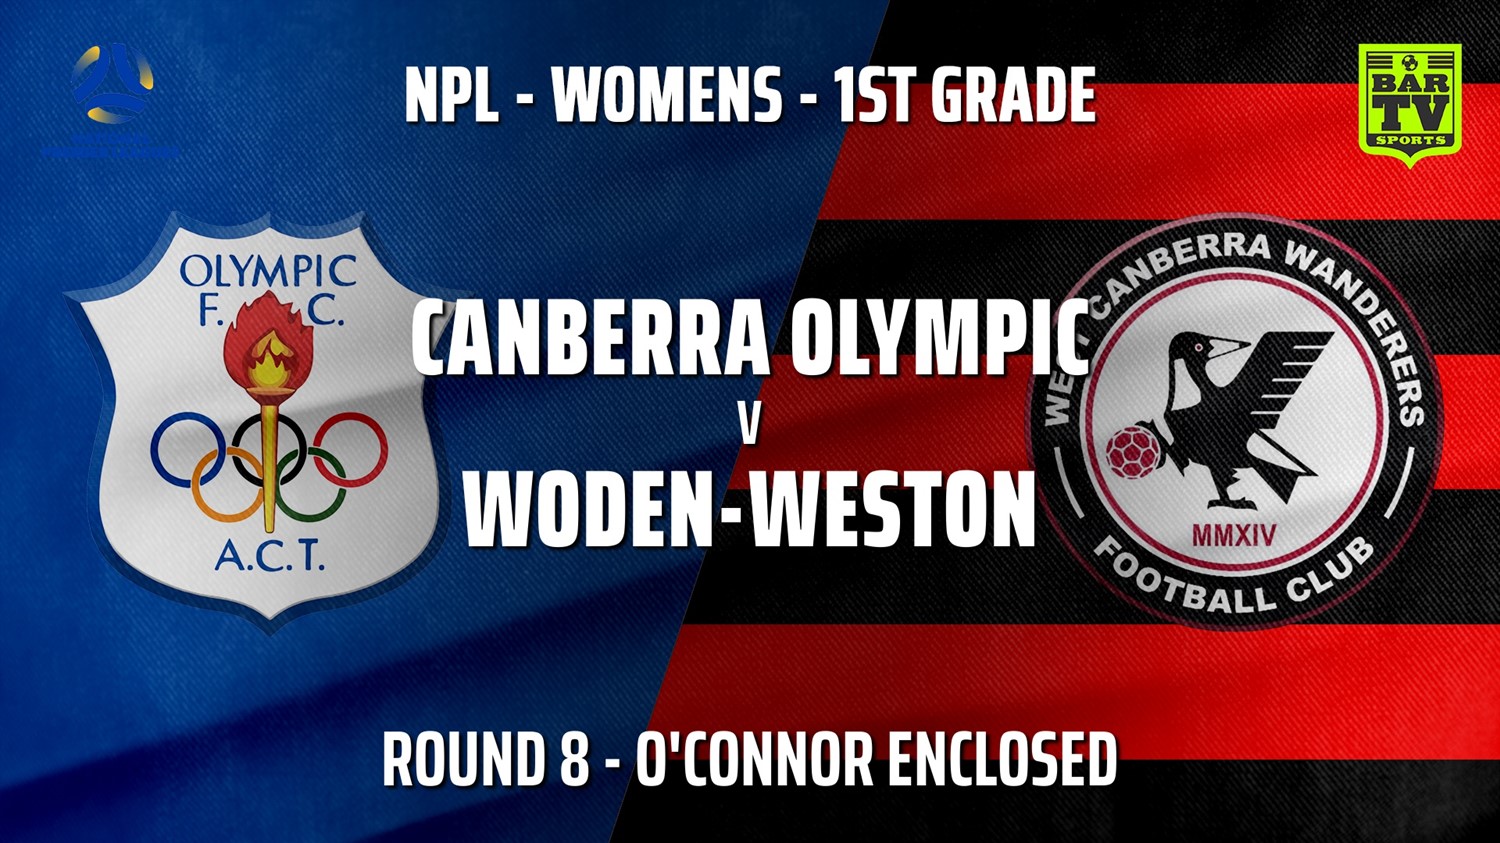 210530-NPLW - Capital Round 8 - Canberra Olympic FC (women) v Woden-Weston FC (women) Minigame Slate Image